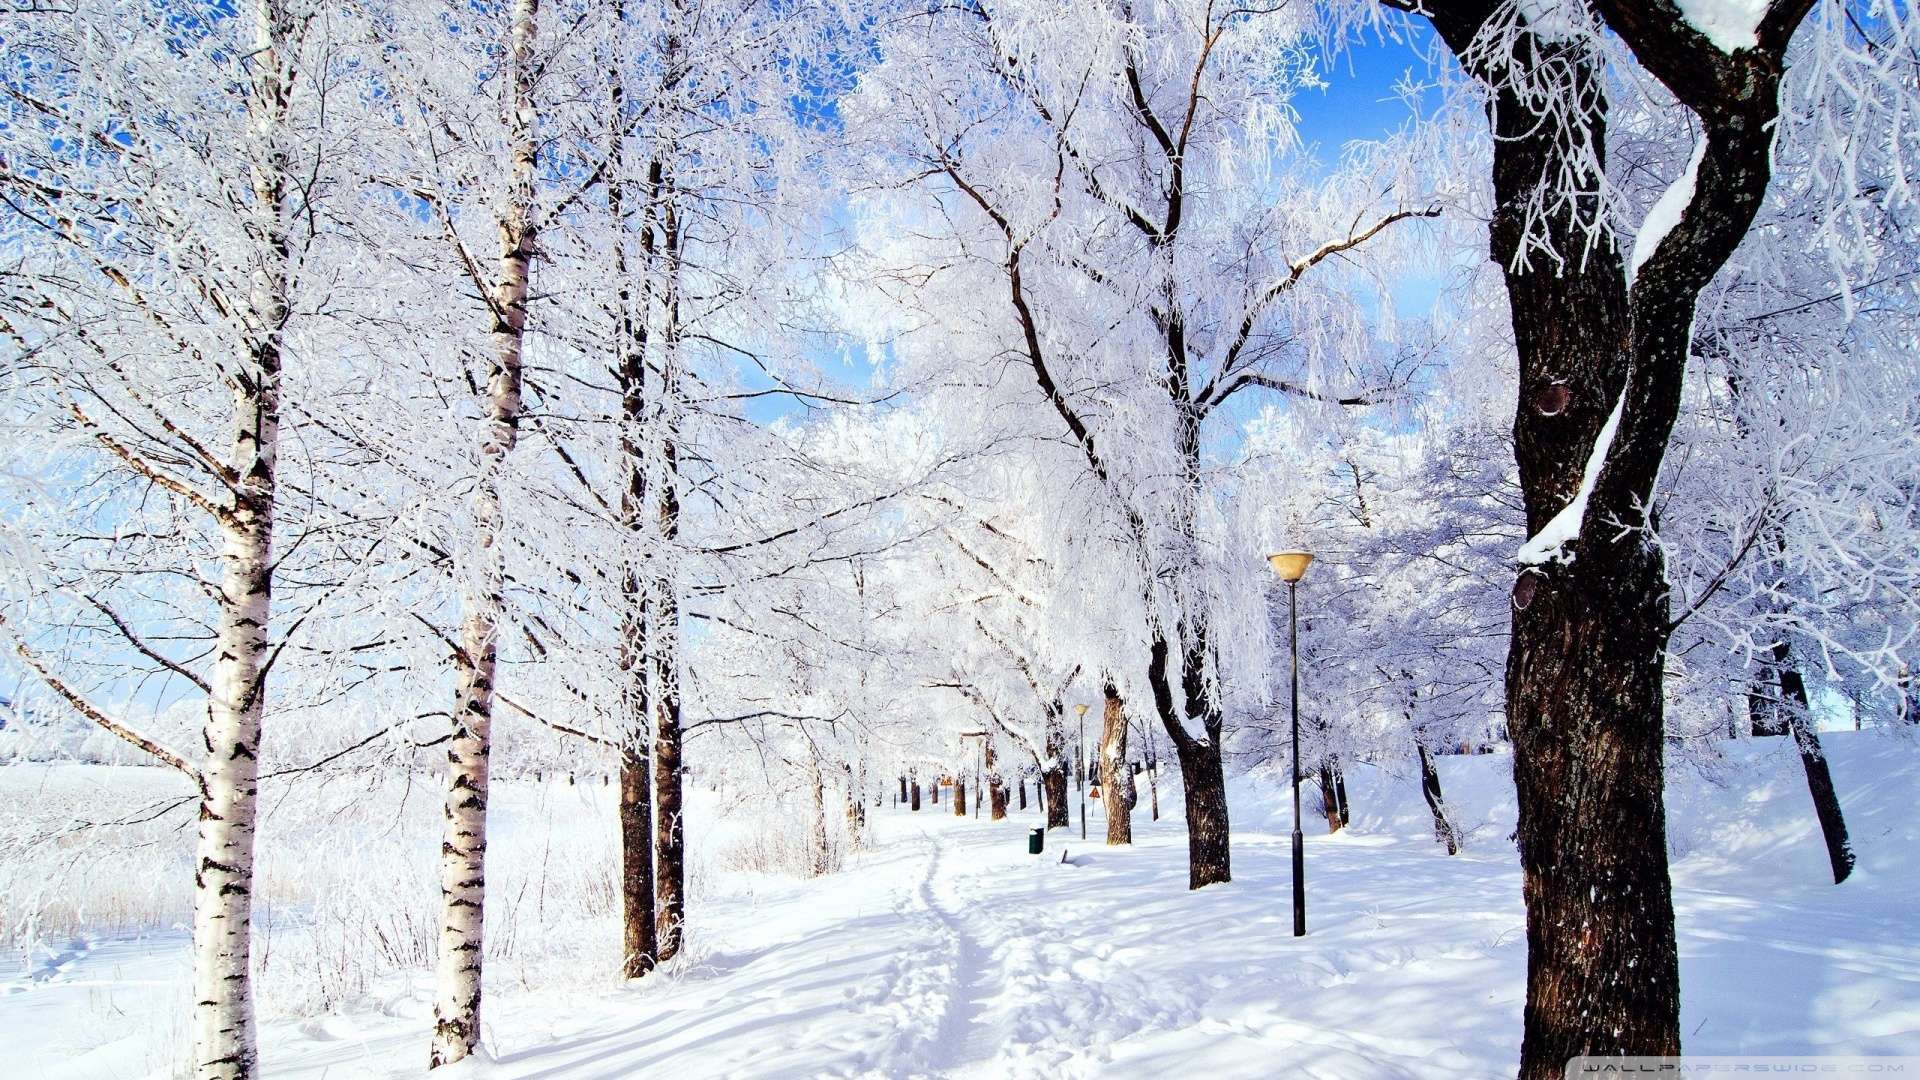 Wallpaper Winter Wonderland 1080p HD Upload At February